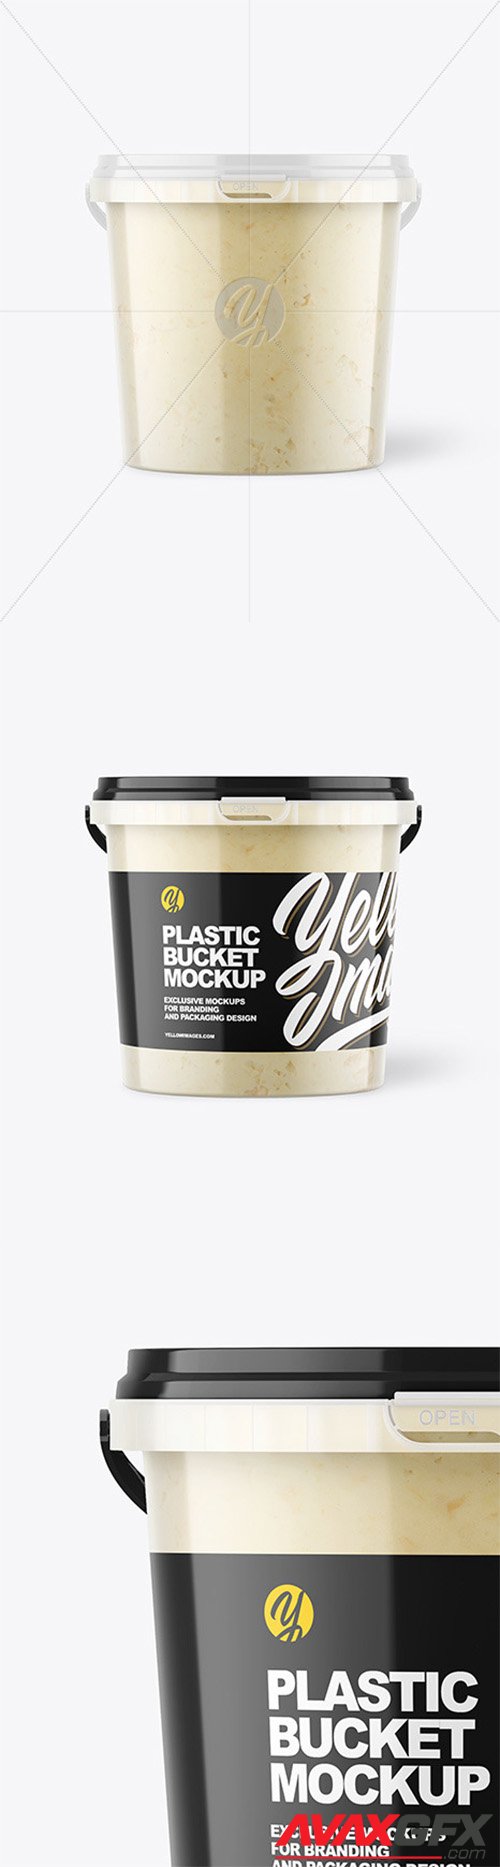 Plastic Bucket with Sauce Mockup 66579